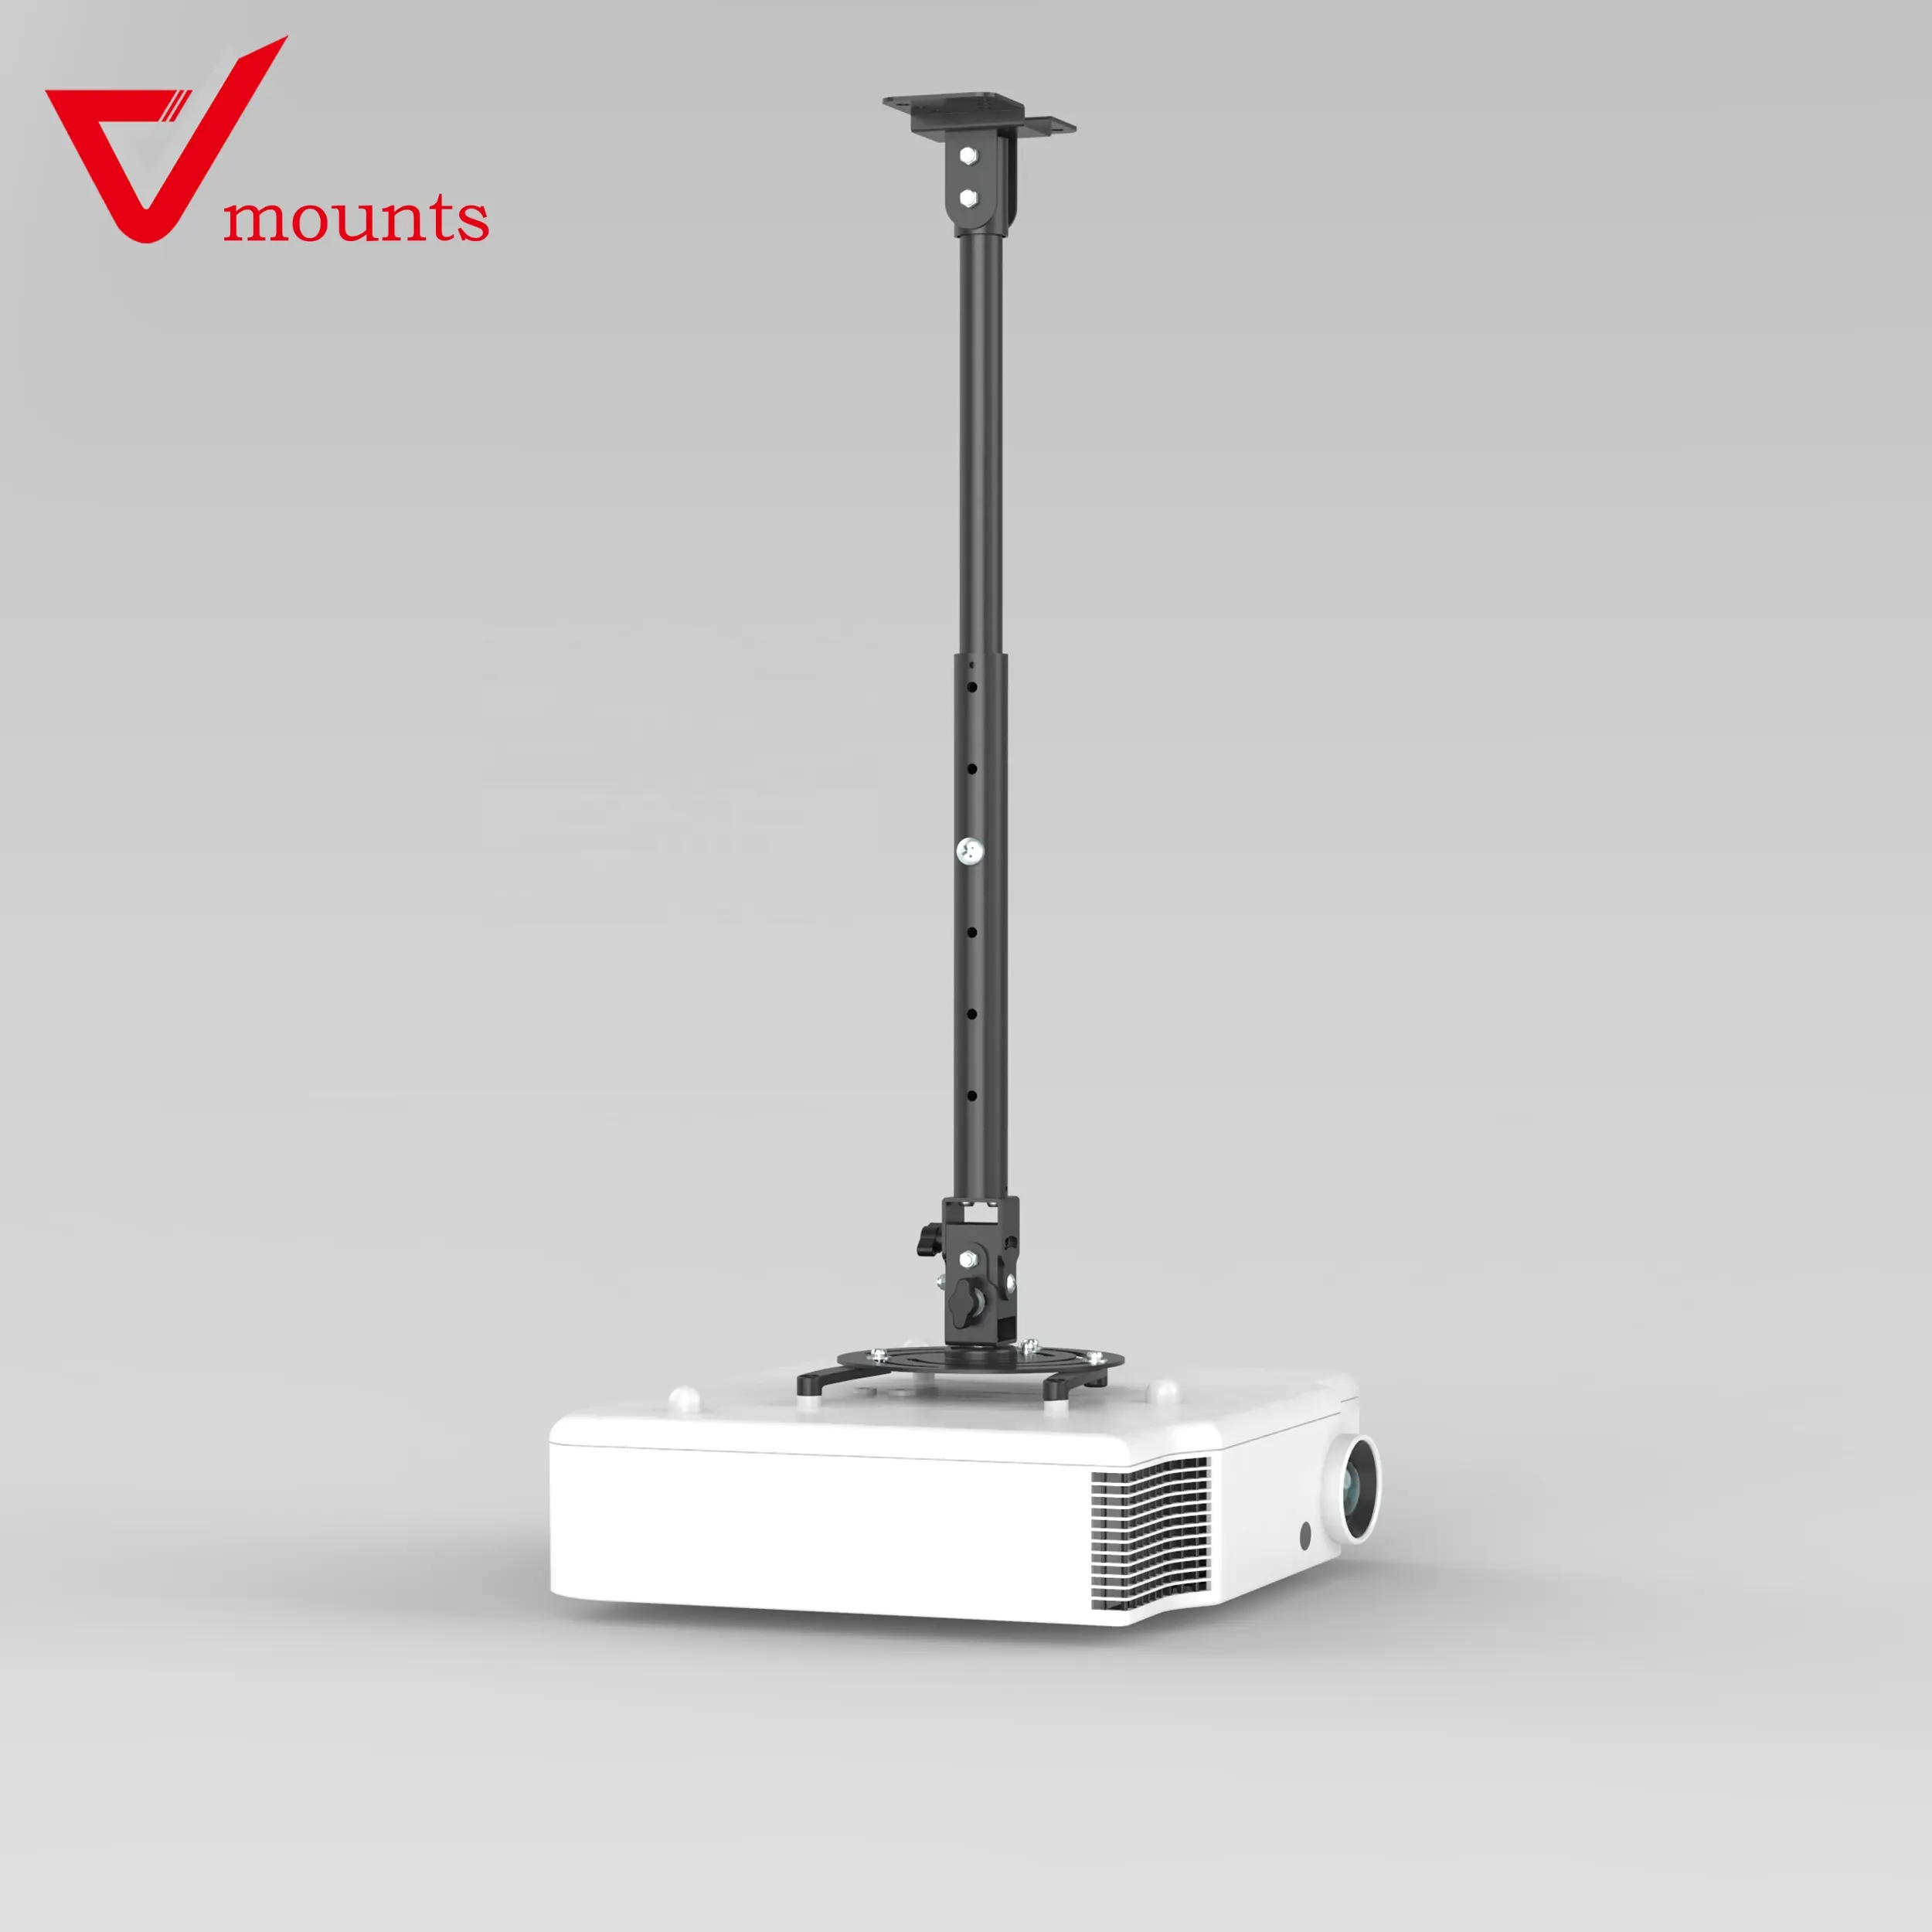 V-mounts זווית הטיה חינם התאמה ידנית טלוויזיה סוגר stand עבור מקרן